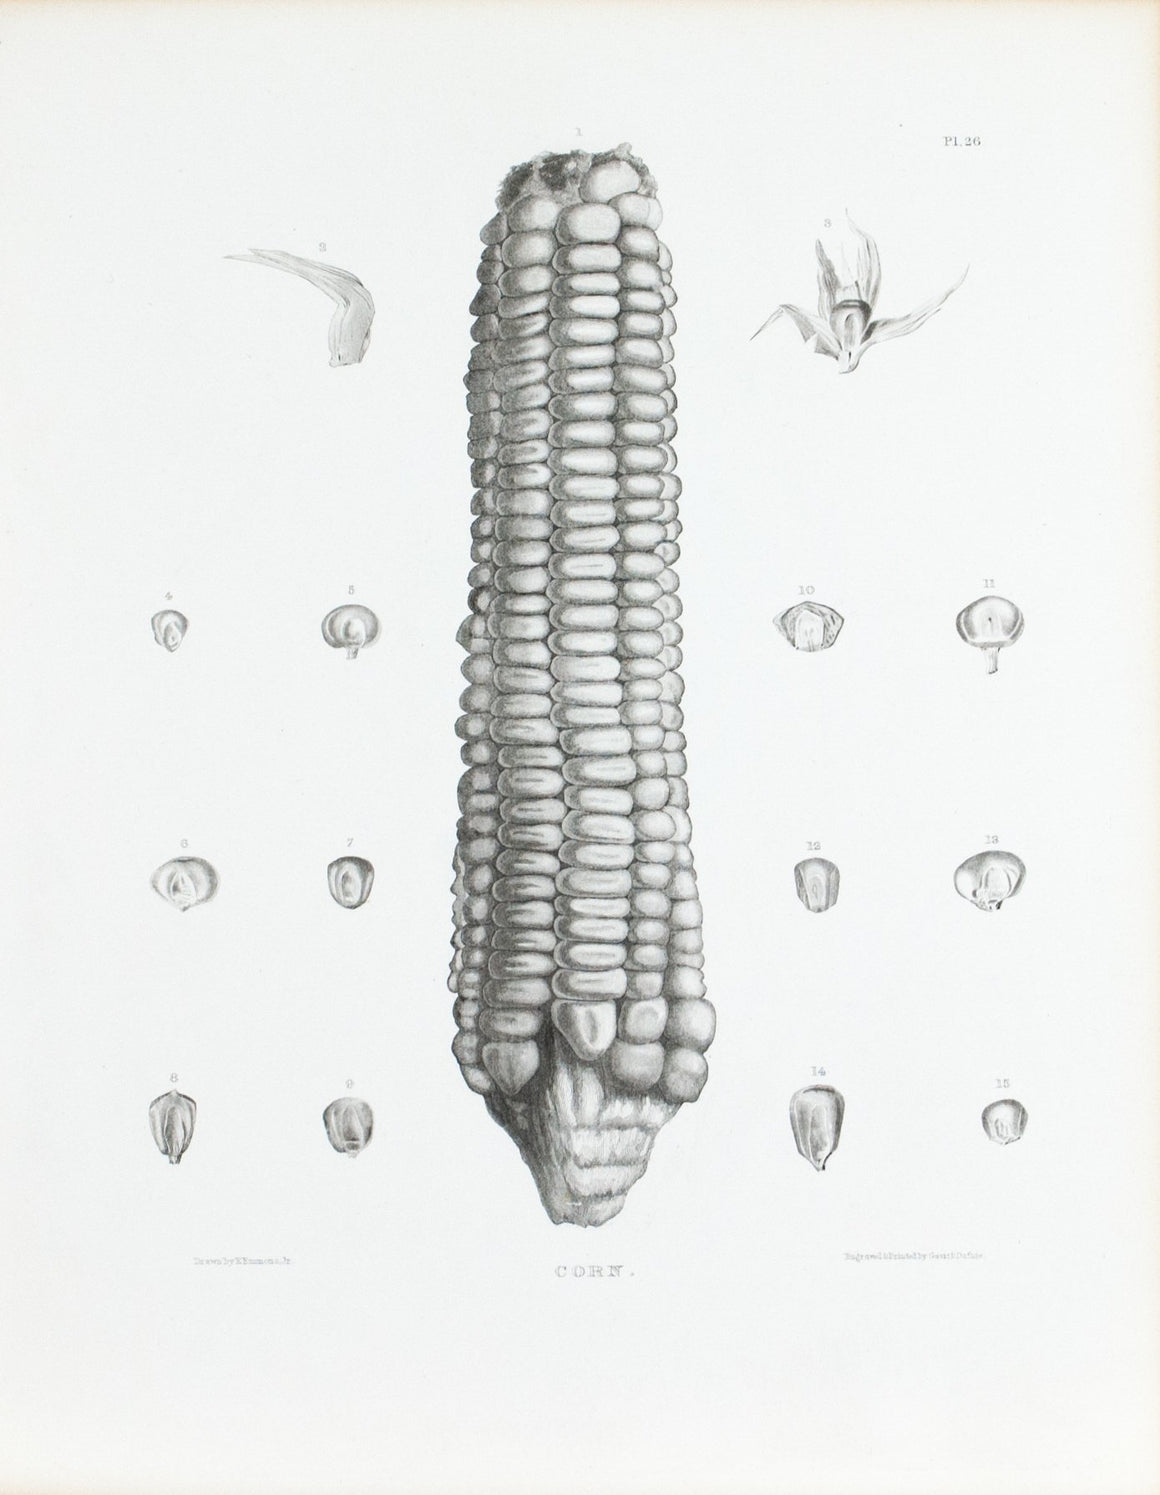 1849 Pl 26 Varieties of Maize - Emmons 